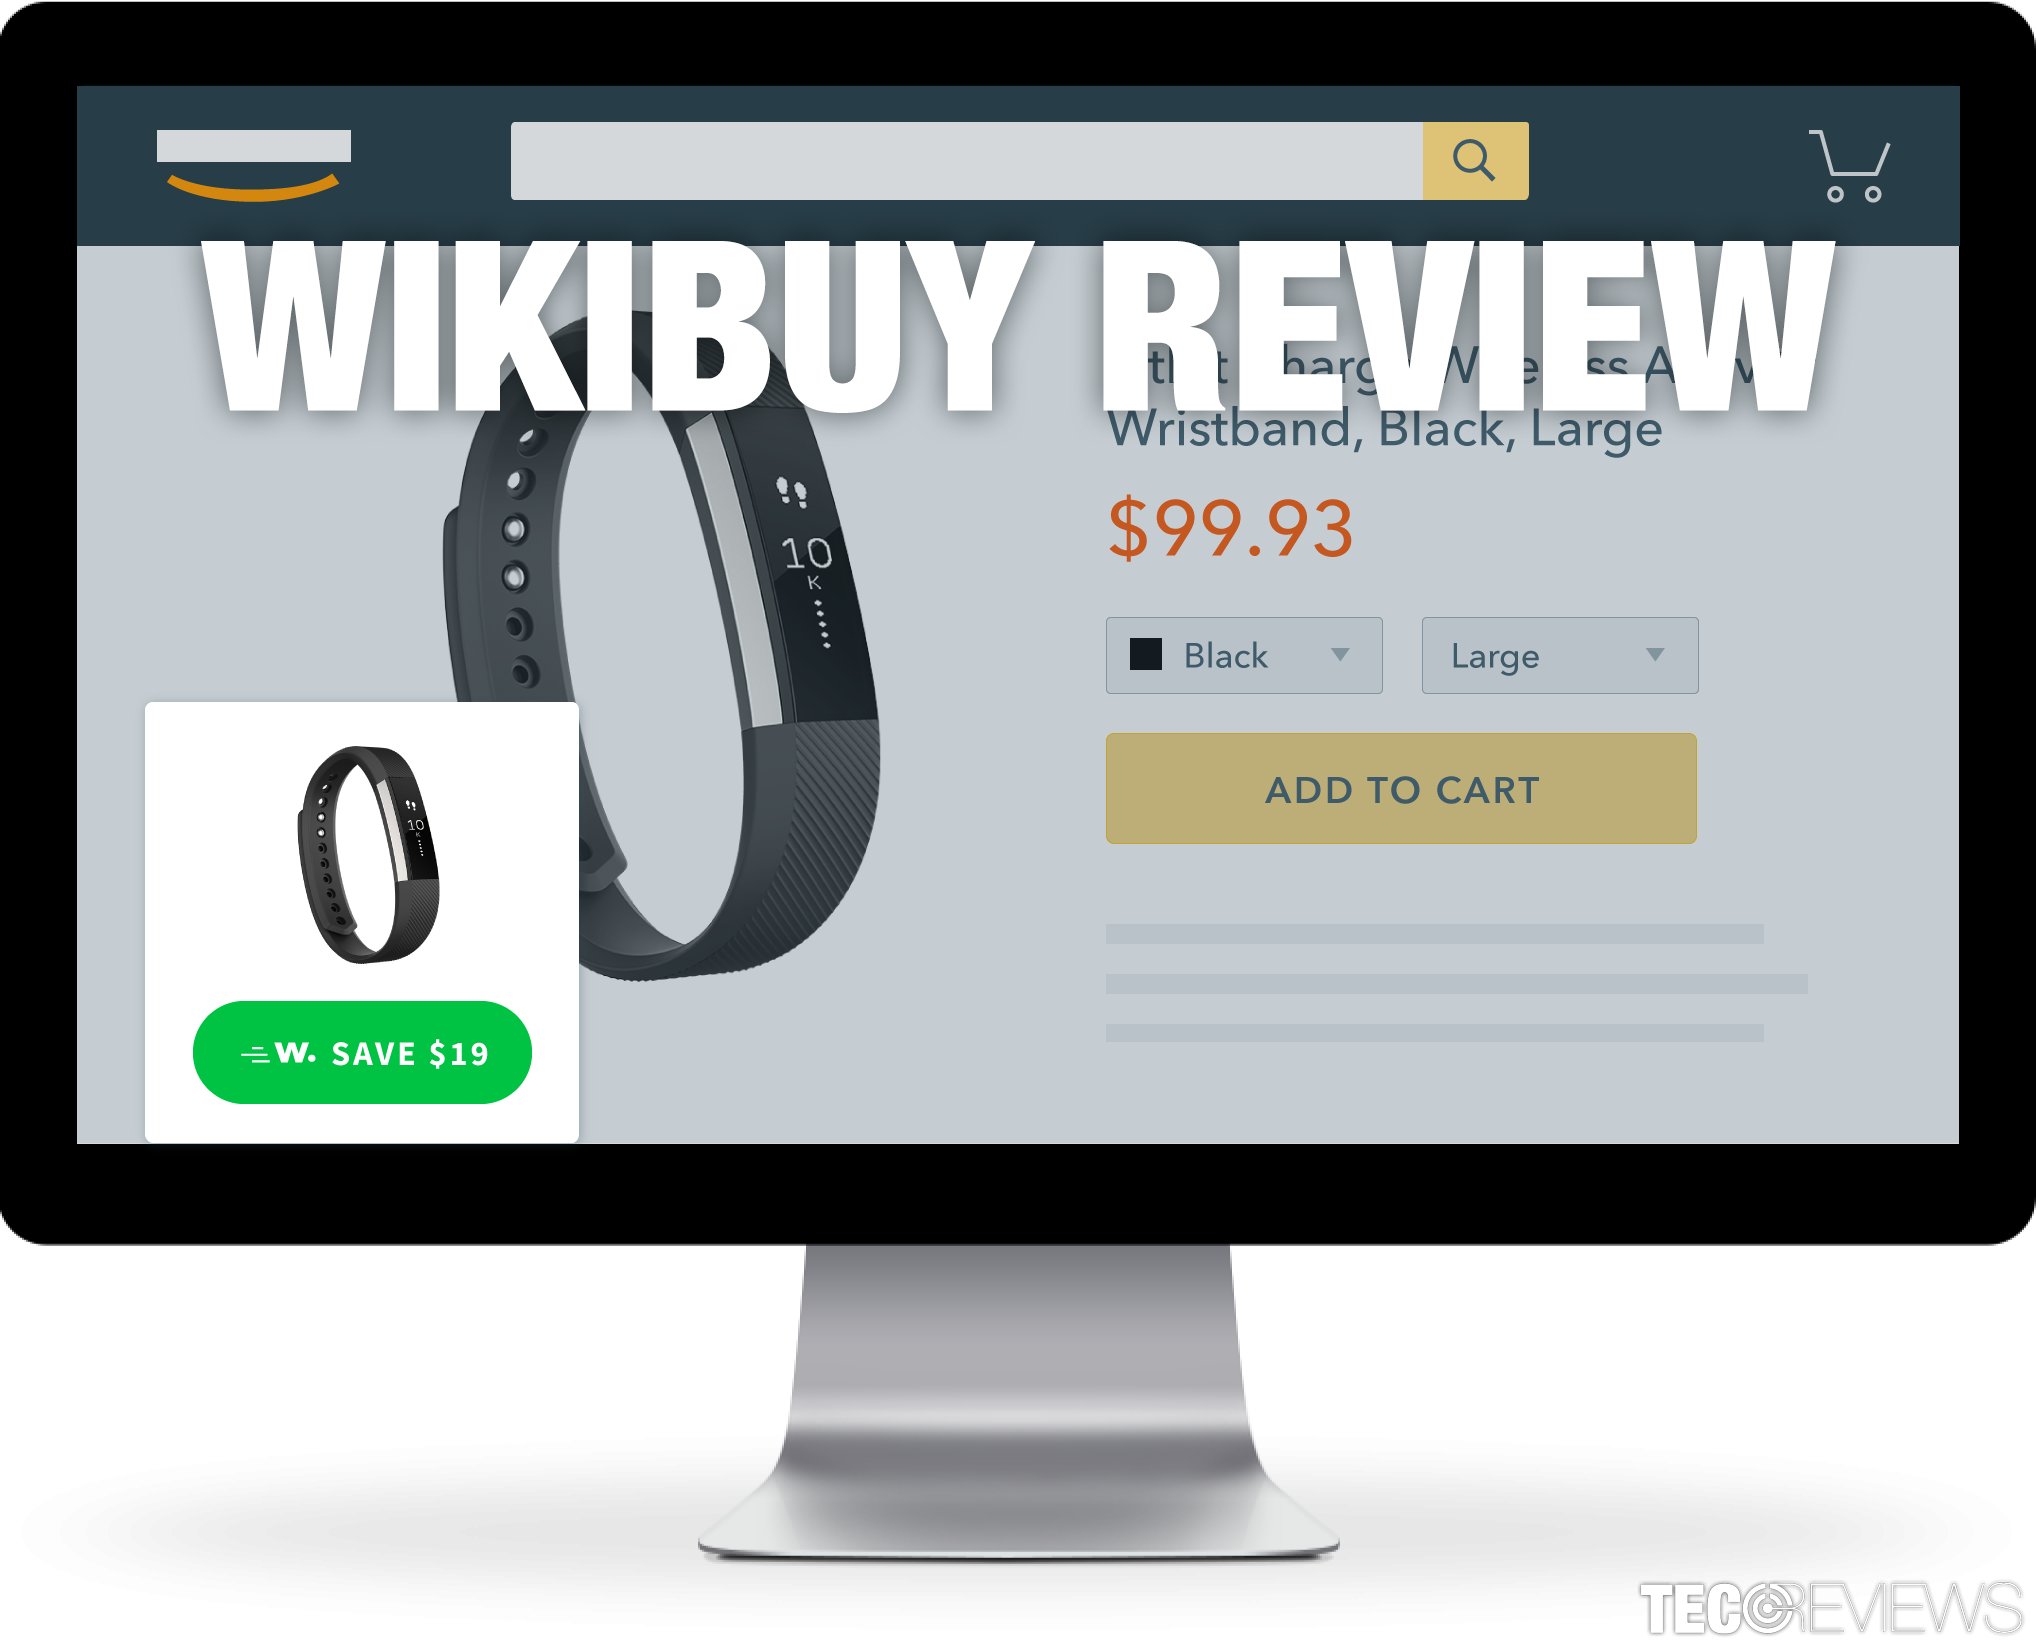 Wikibuy Review Tecoreviews